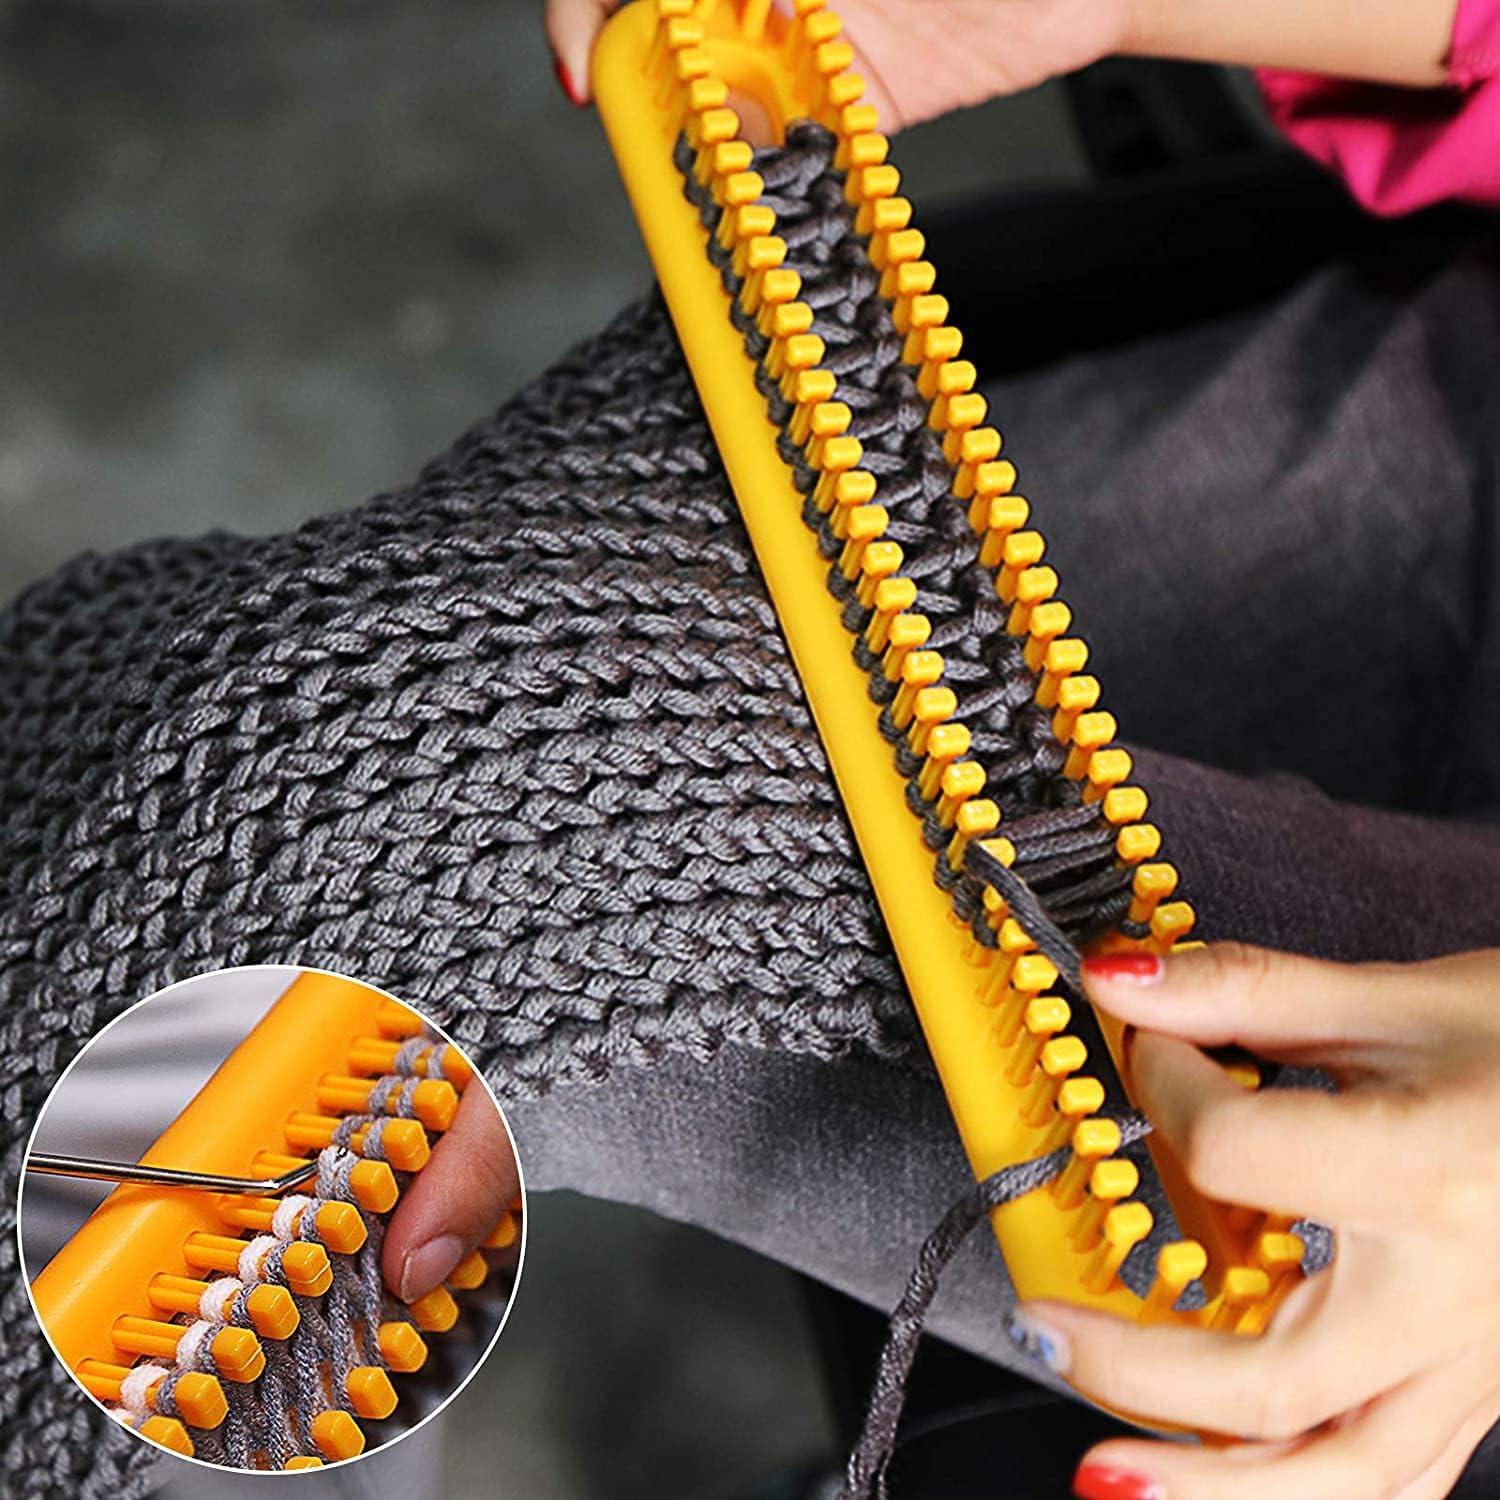 DIY Sweater Knitting Machine with Crochet Hooks Rectangular Knitting Loom  Kit Weaving Scarf Hat Shawl Stitching Tool Crochet